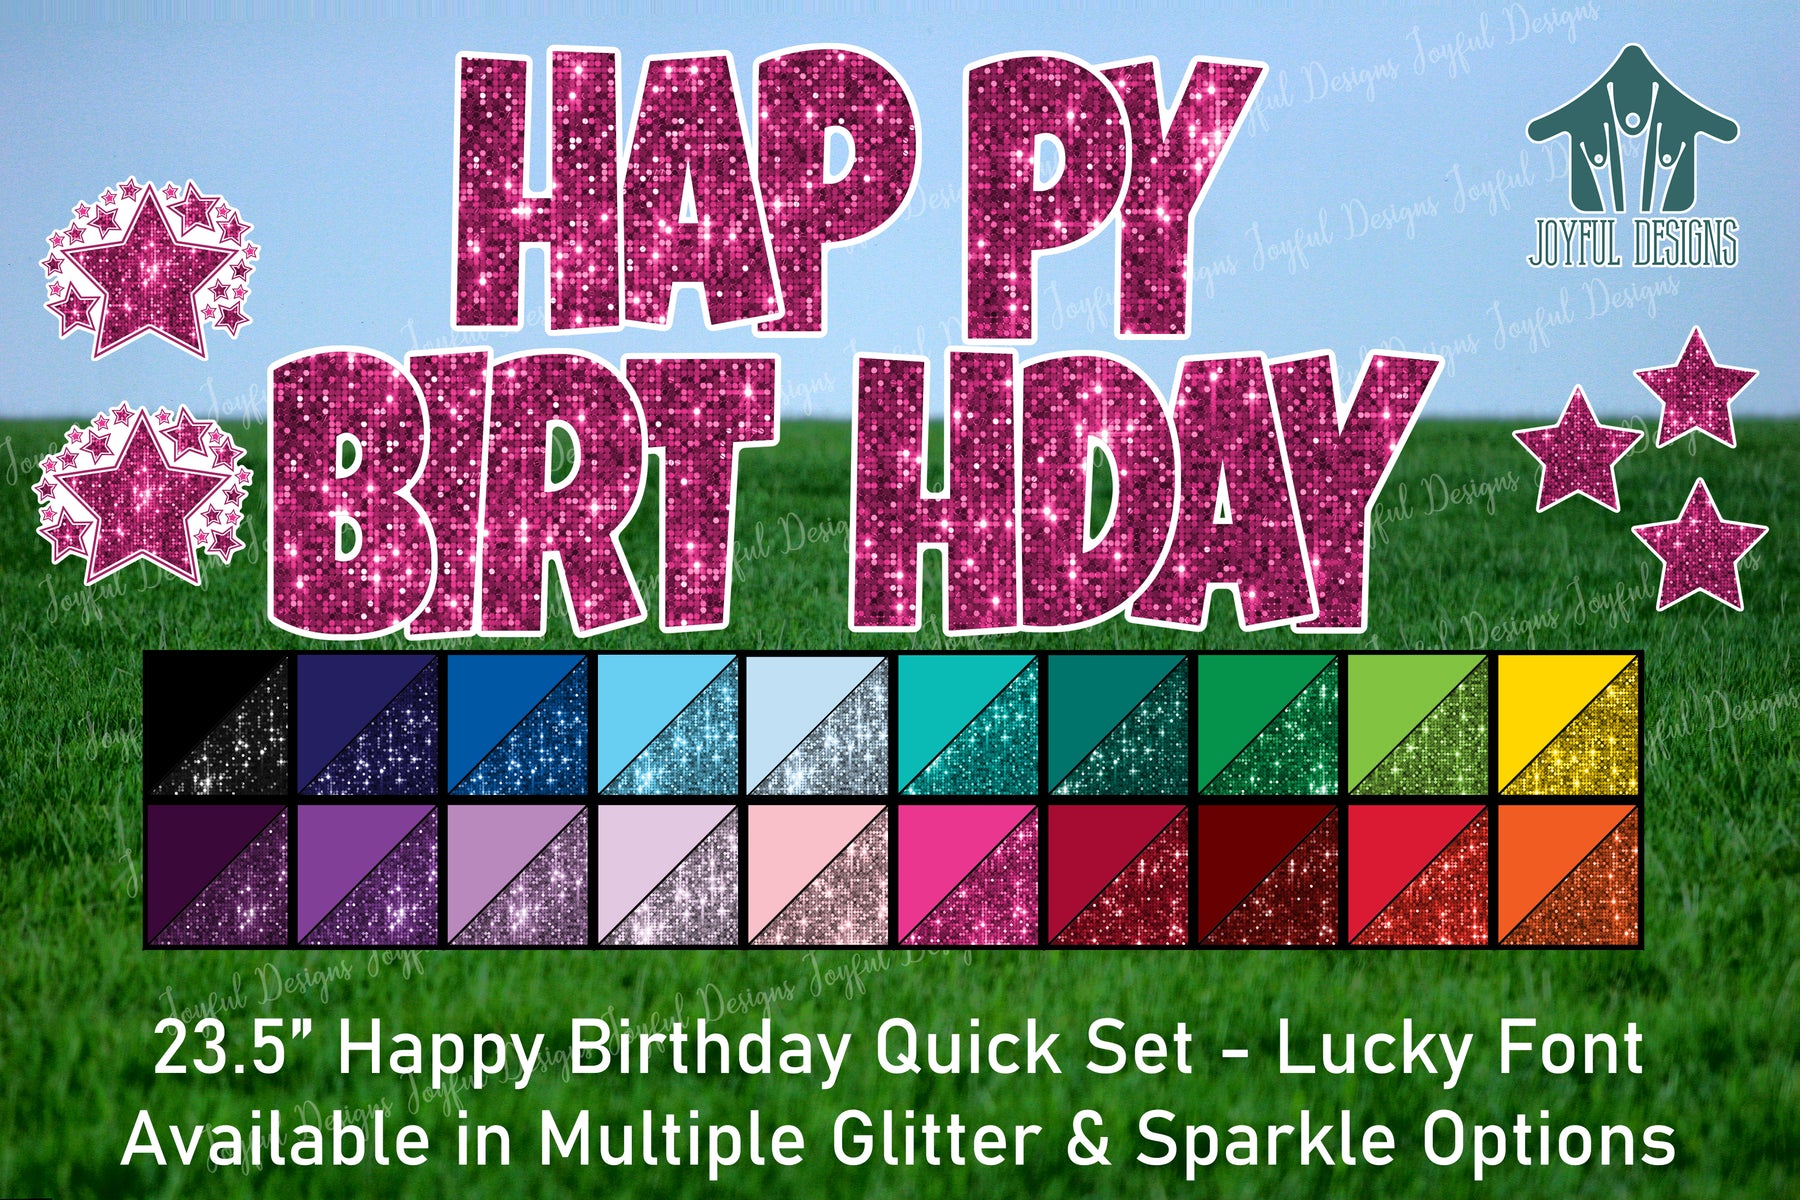 23.5" Happy Birthday Quick Set - Lucky Font